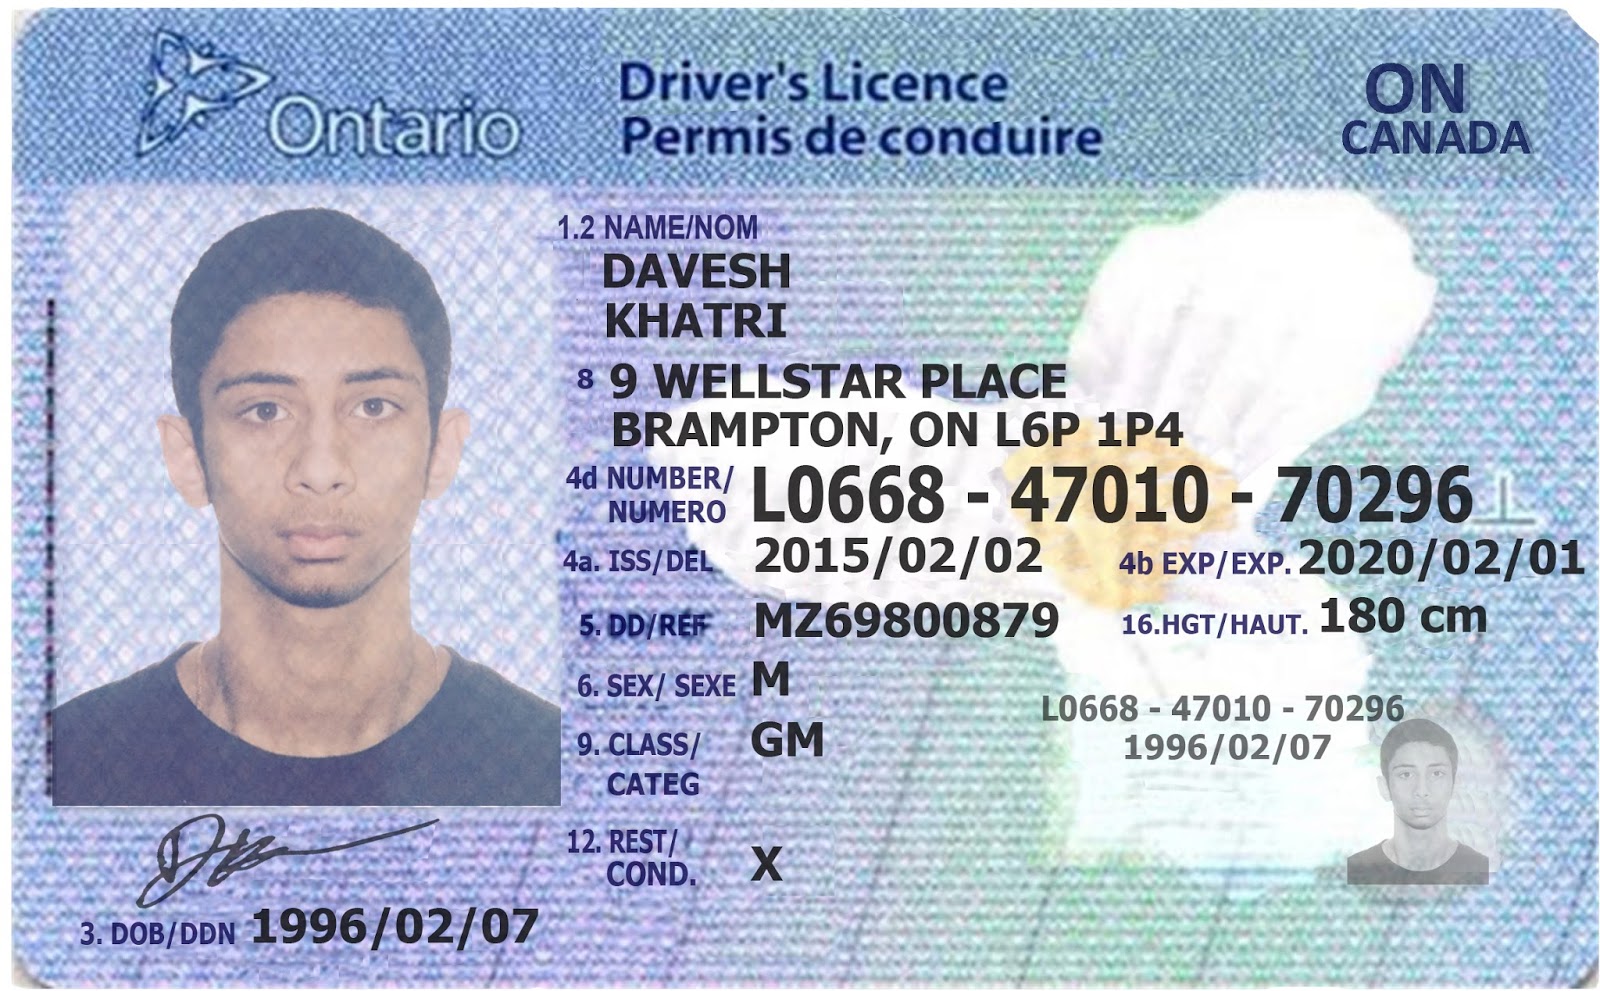 License name. Ontario Driver License. Canadian Driver License. Driving License Canada. Toronto Driver License.